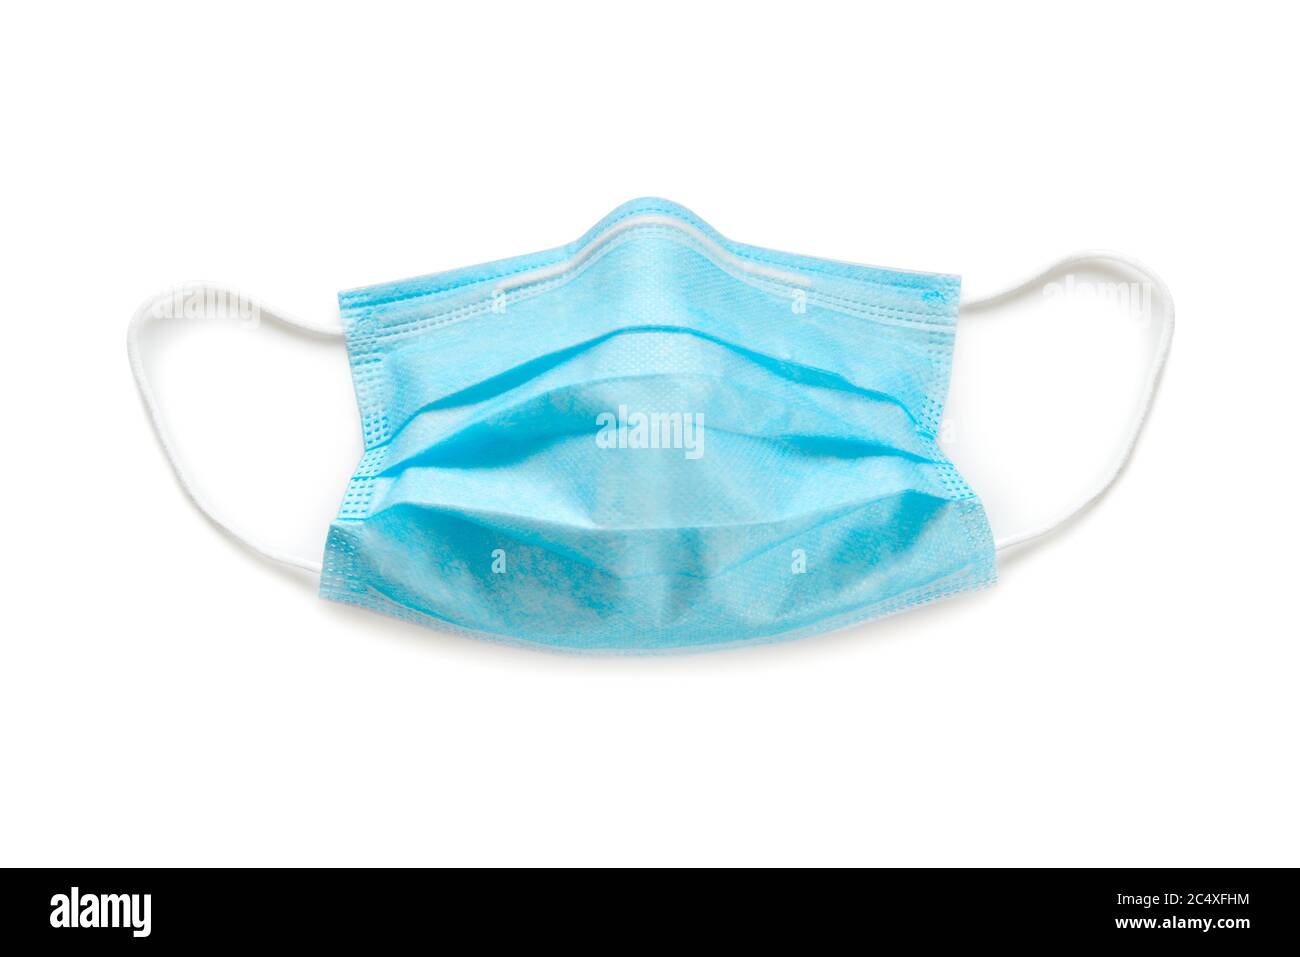 Coronavirus Face Mask PPE Equipment Stock Photo